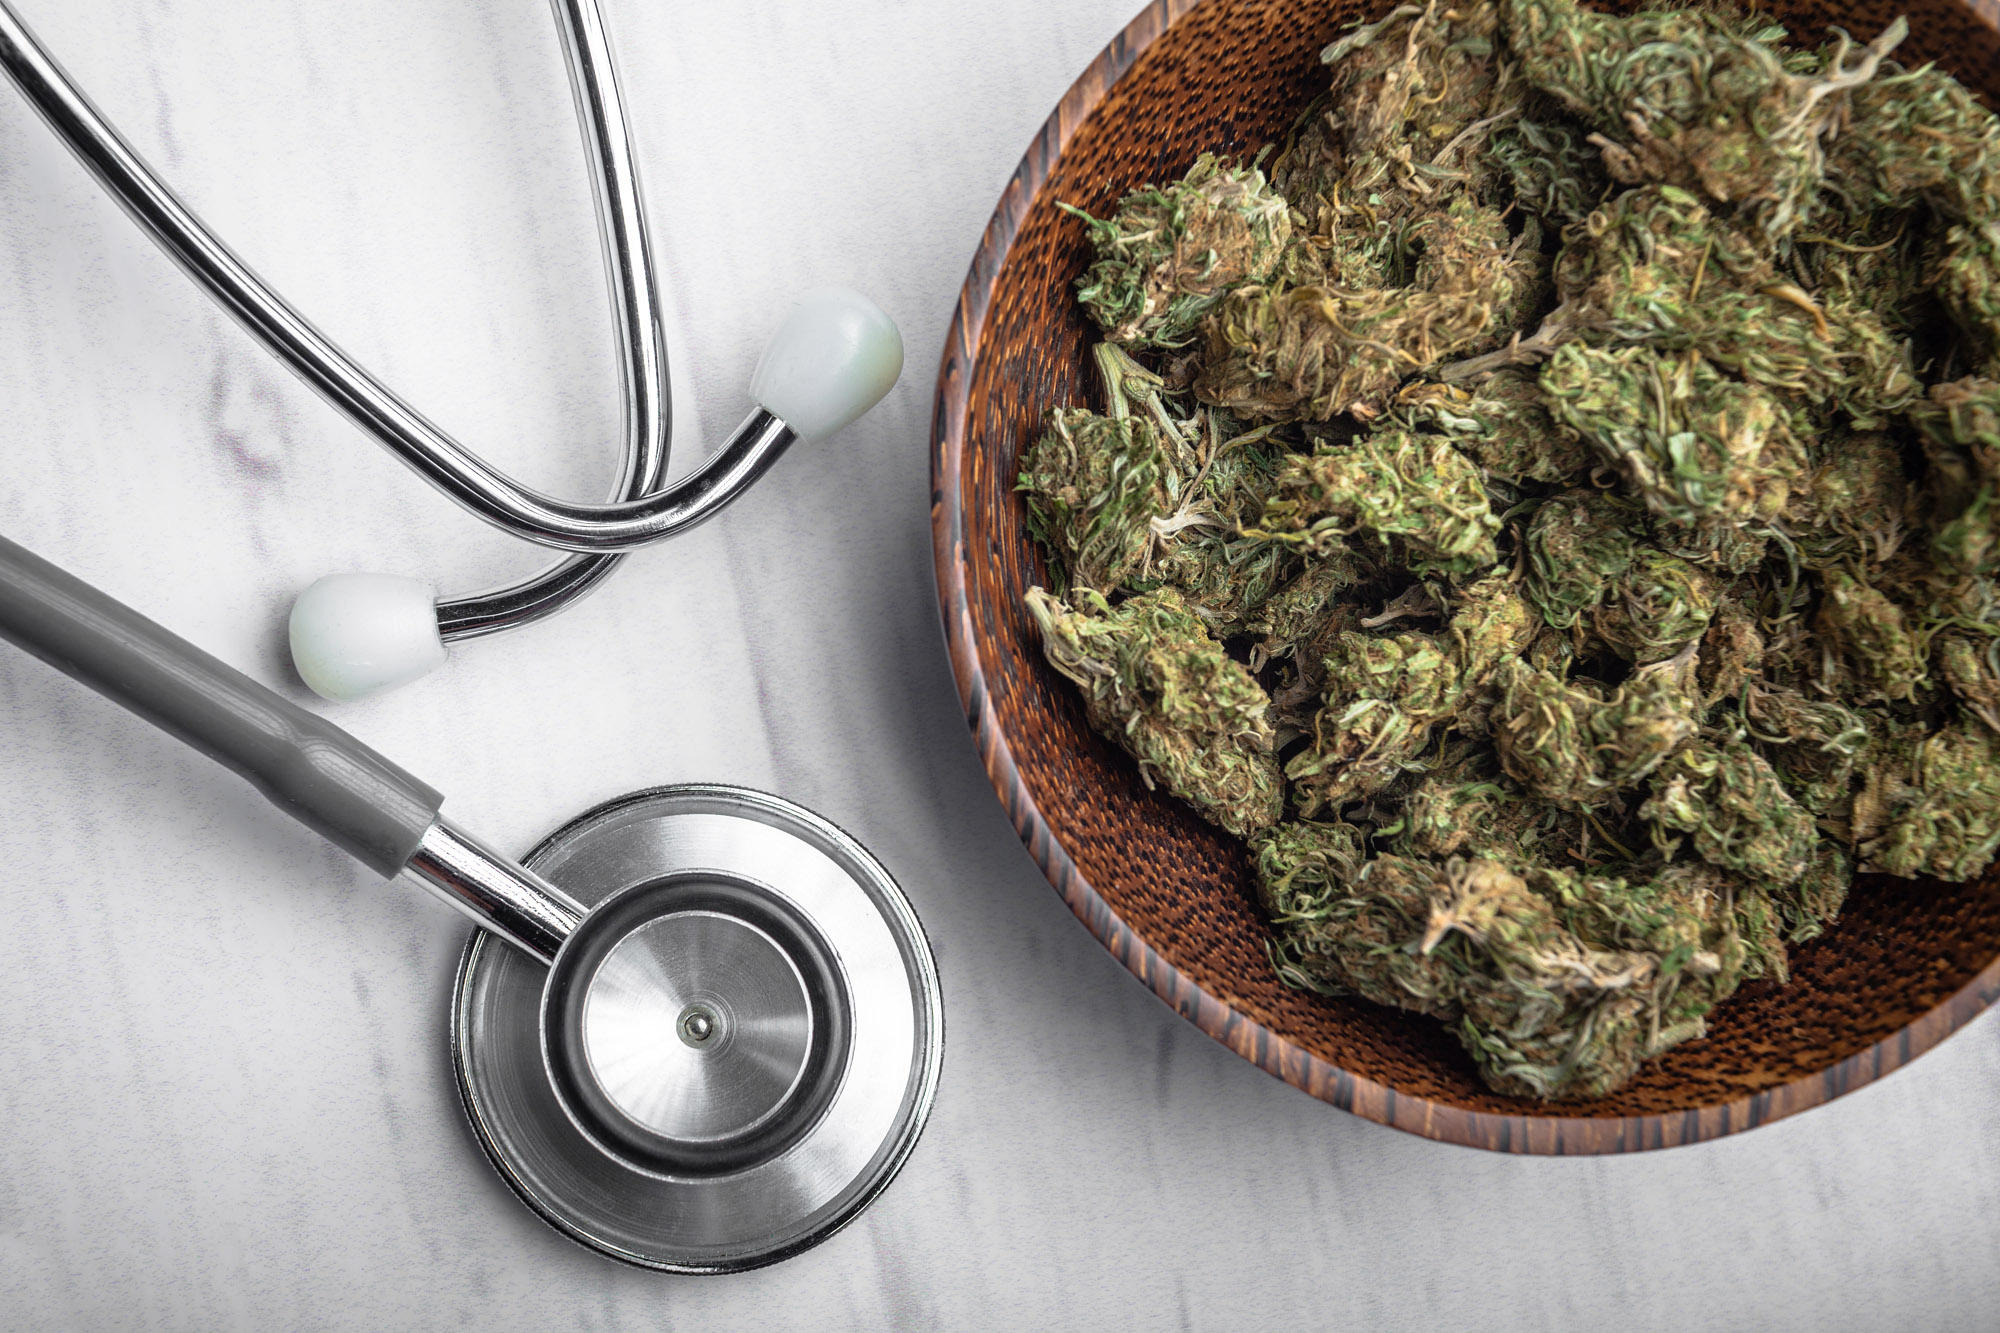 Should You Get a Medical Marijuana Card in Boca Raton?